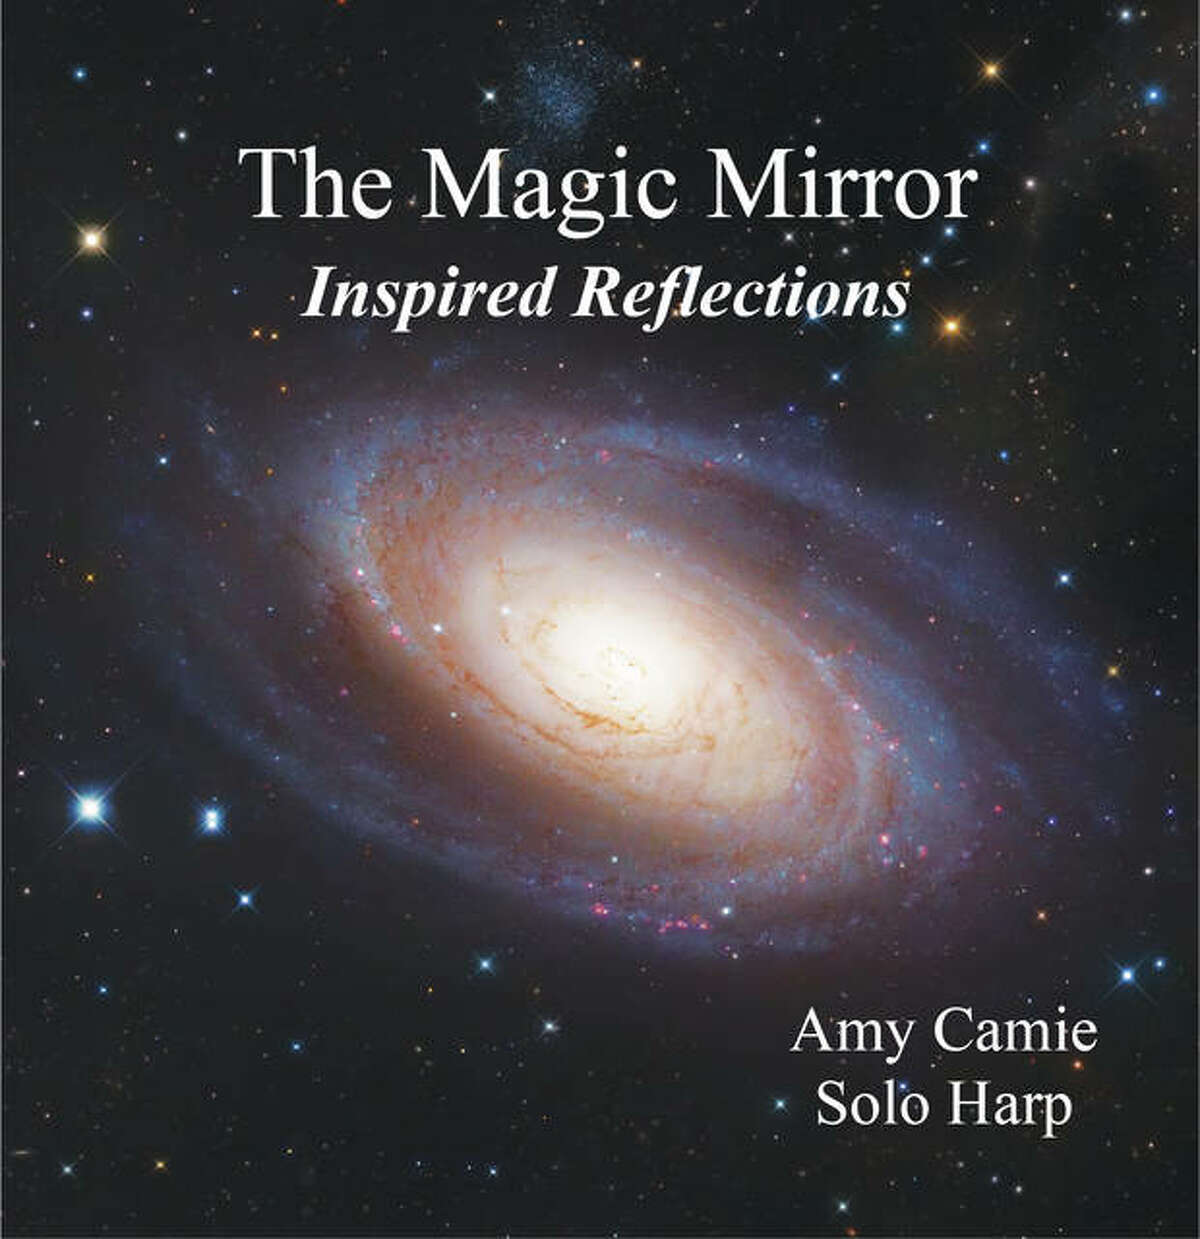 “The Magic Mirror” CD